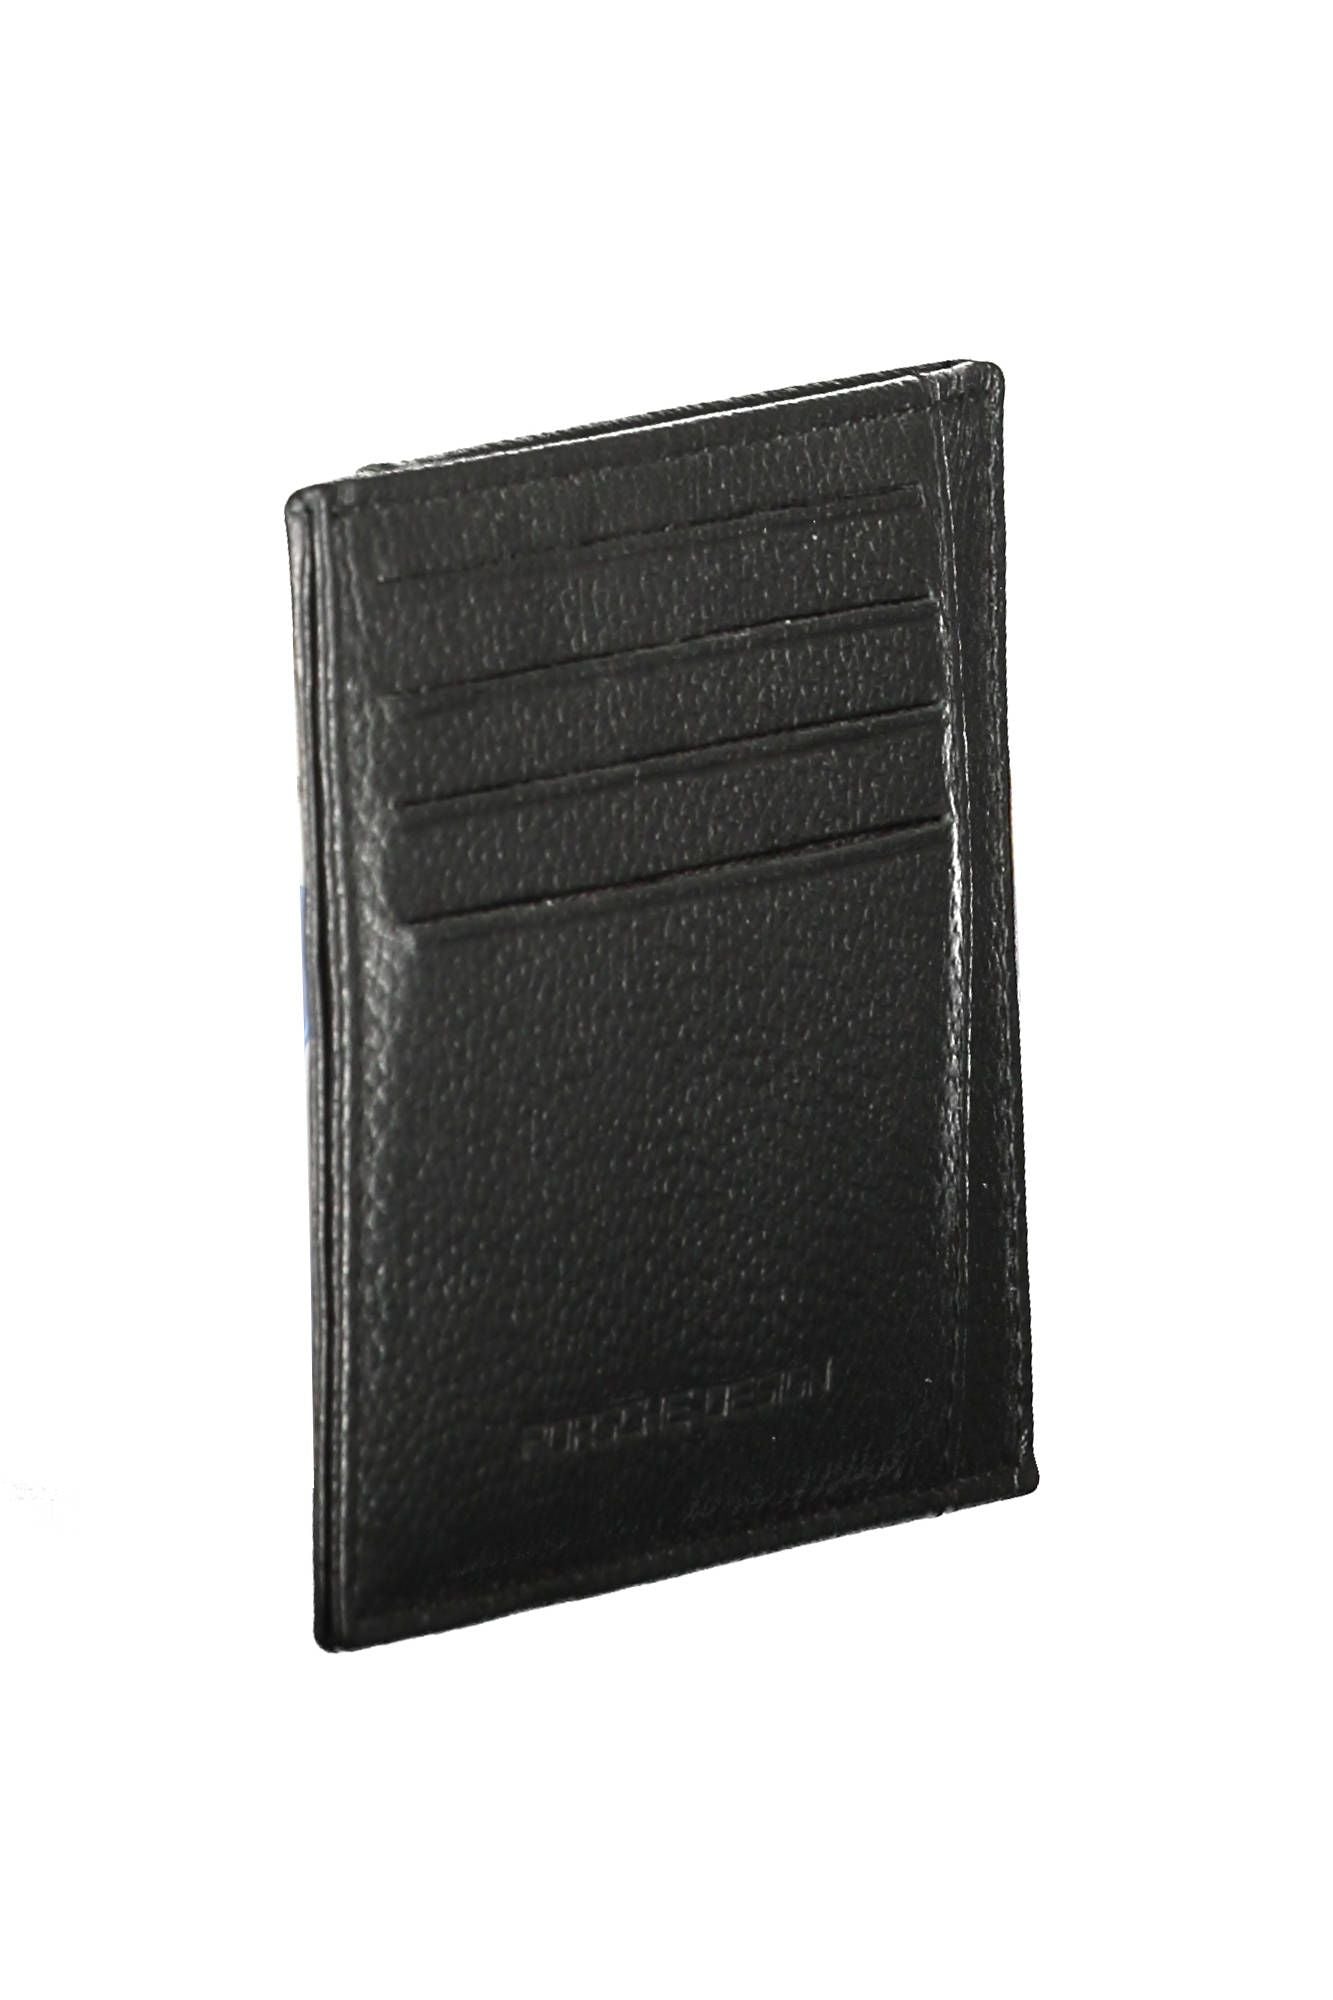 Sleek Leather Card Holder with RFID Blocker